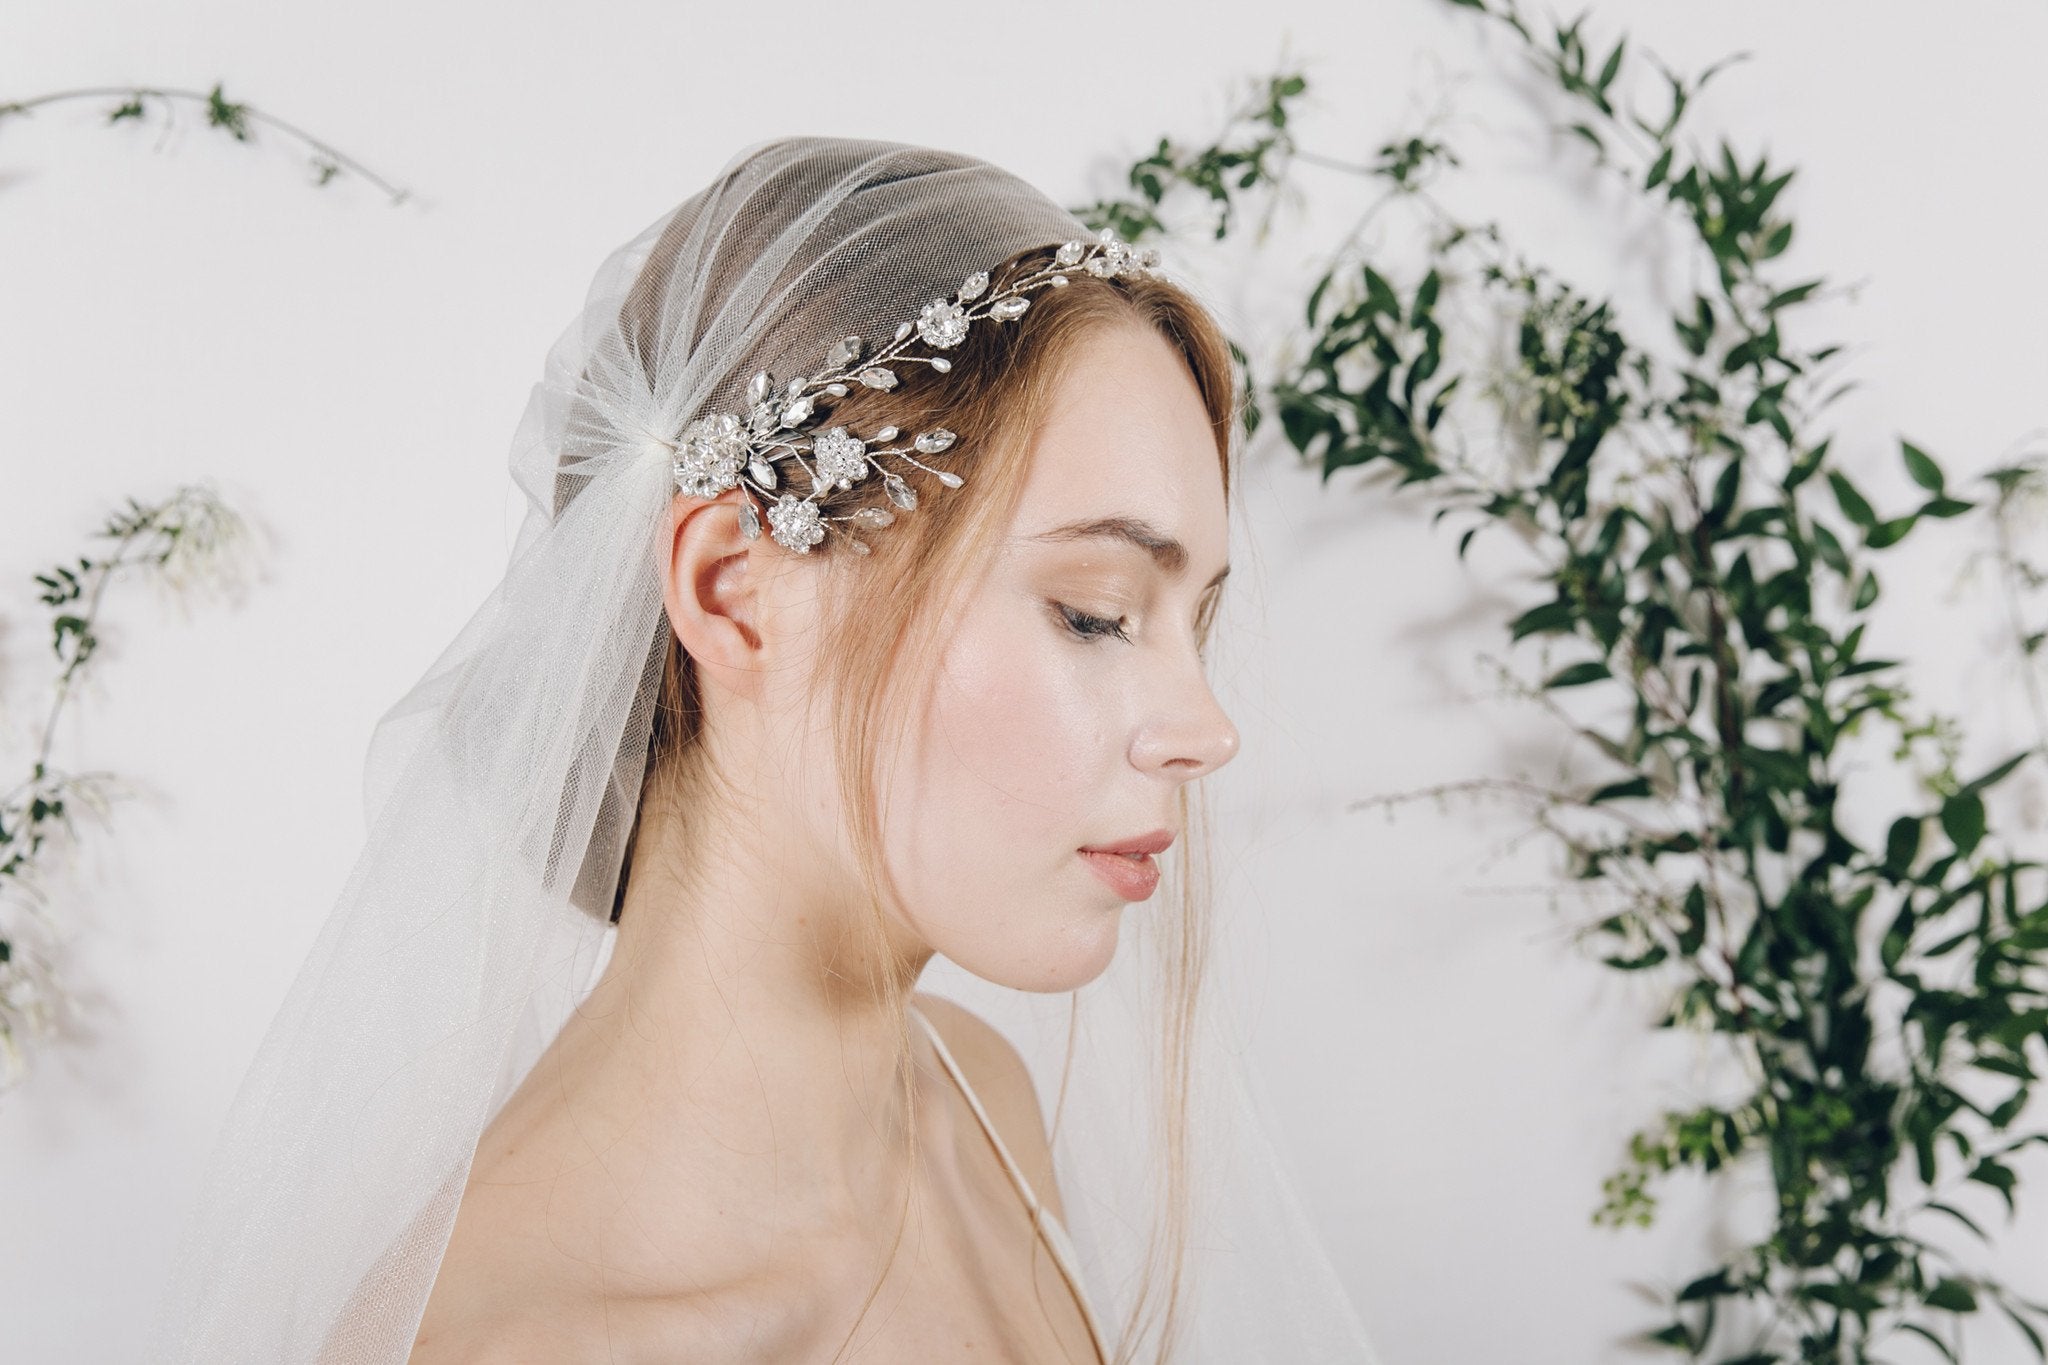 Crystal and pearl wild flower wedding headband with Juliet cap veil